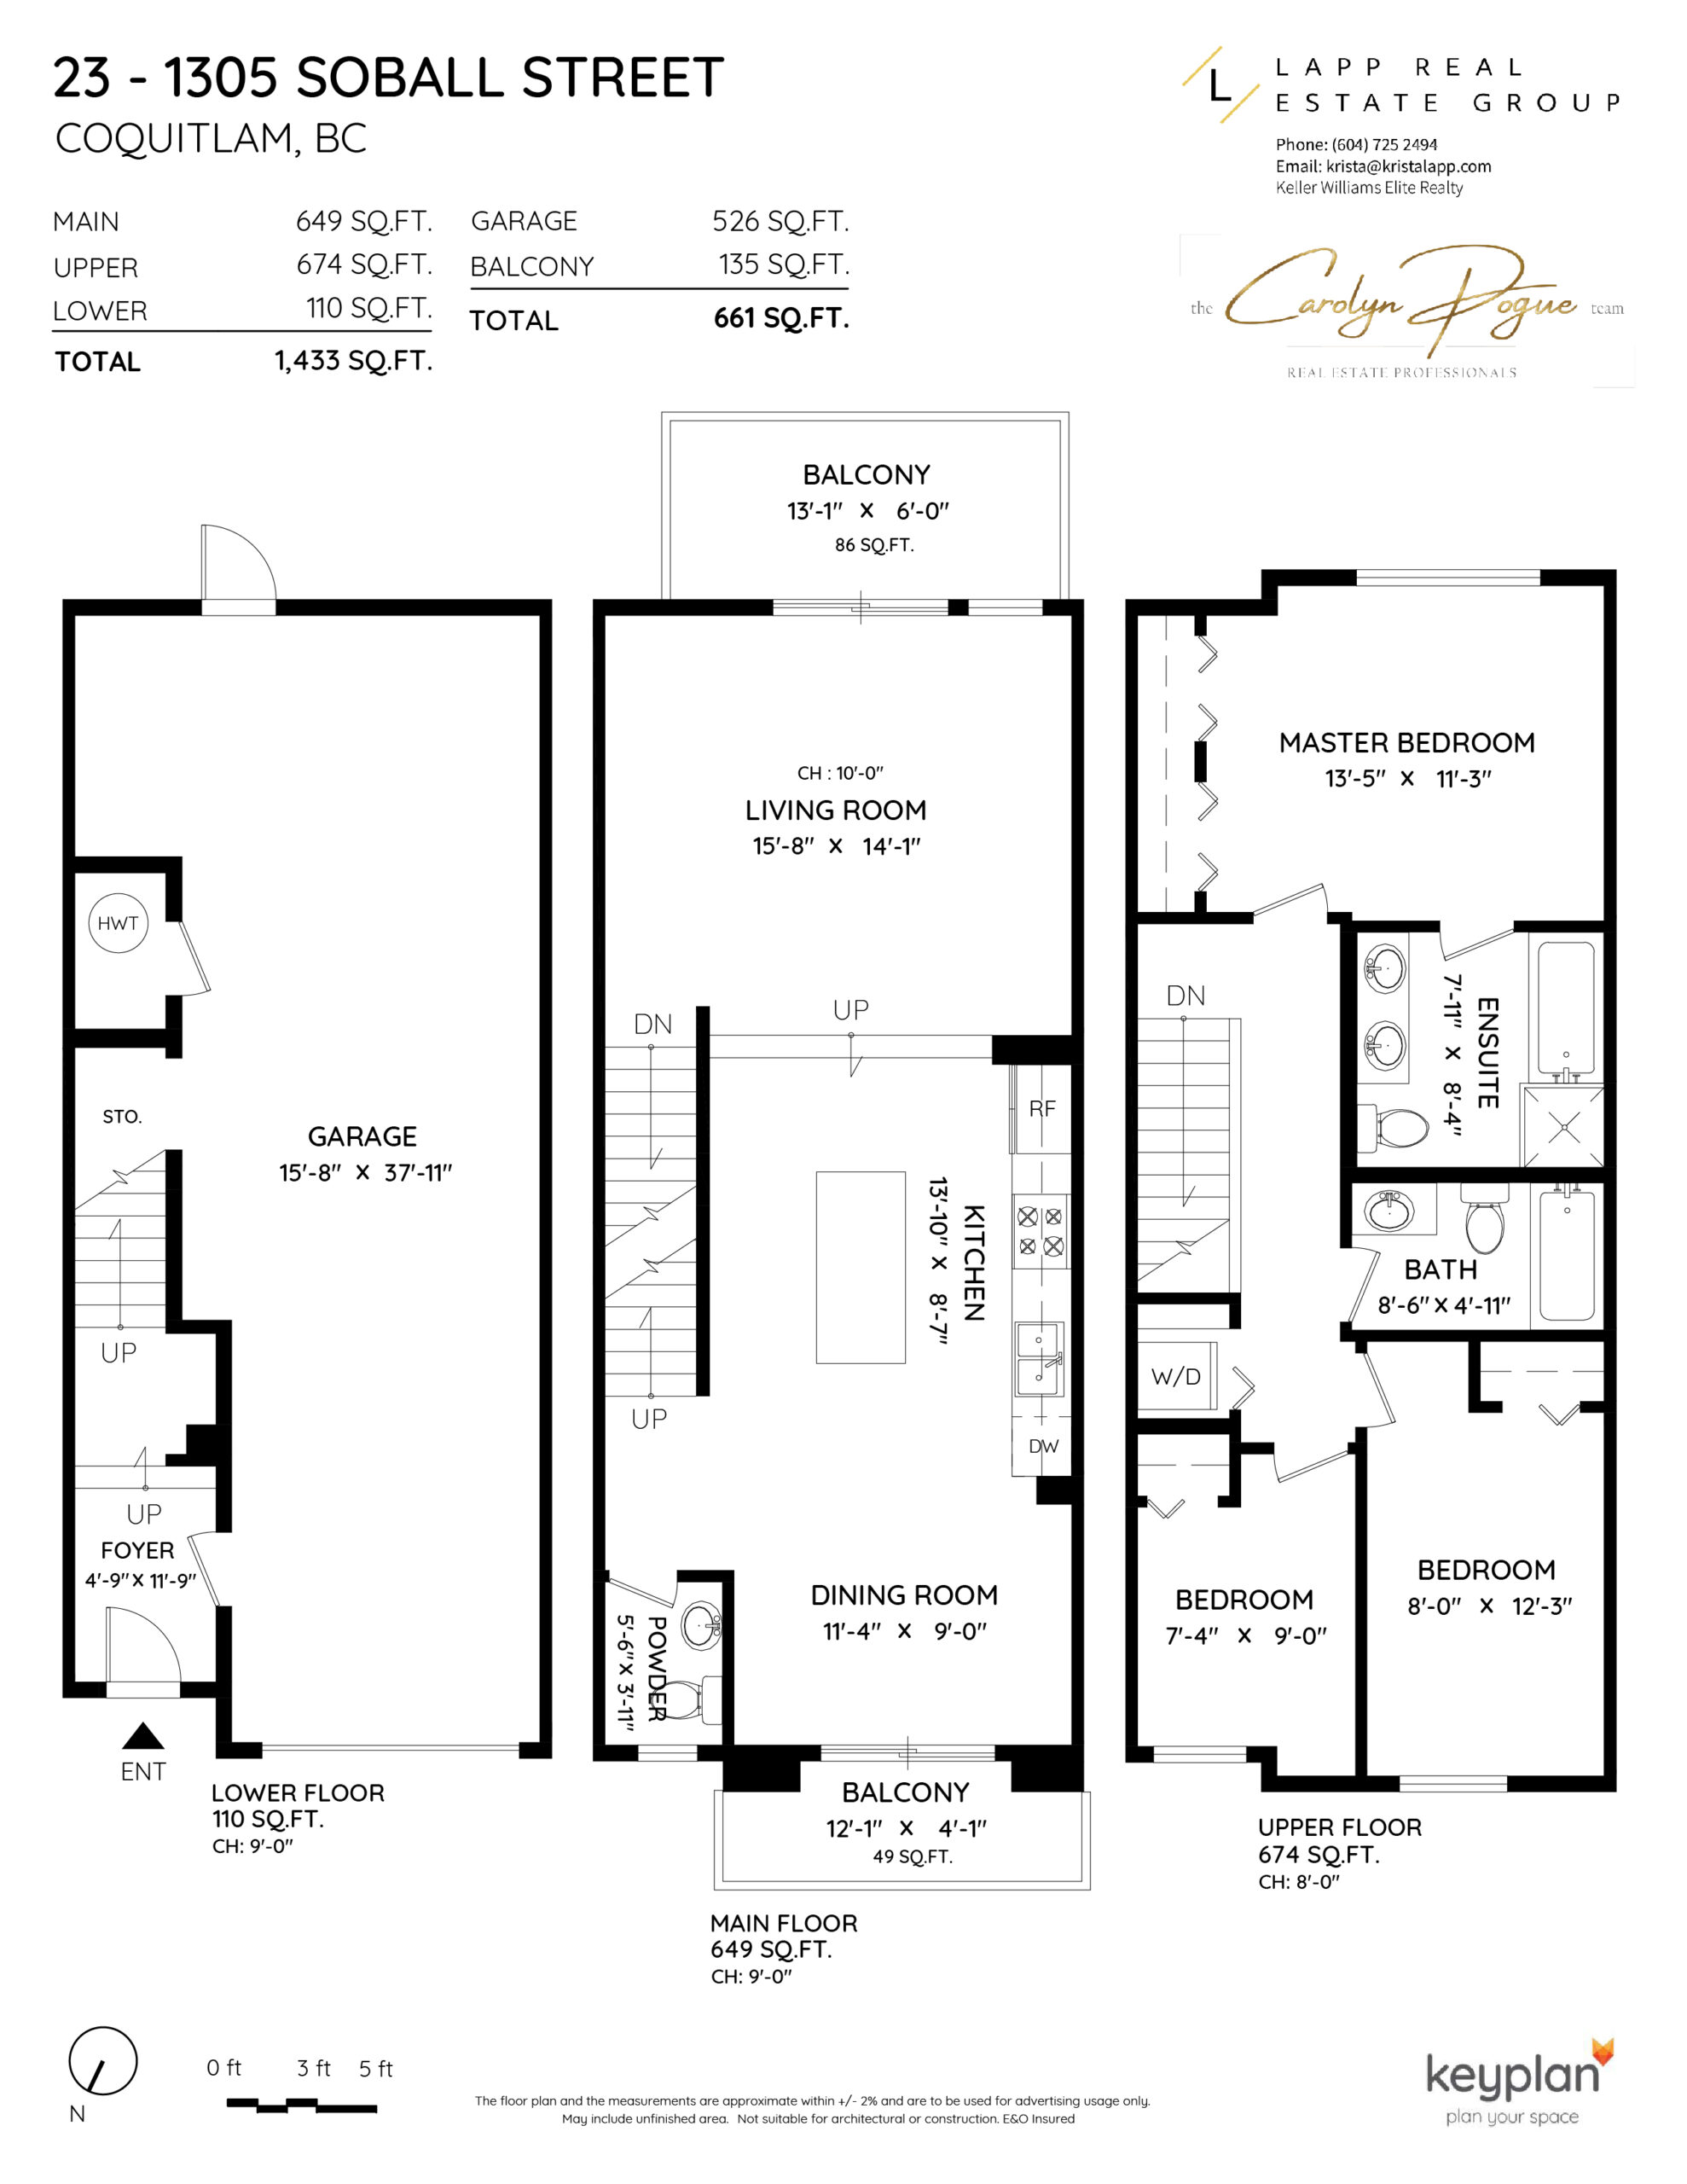 Top Coquitlam Realtor Krista Lapp Unit 23 1305 Soball Street Burke Mountain Coquitlam Floor Plan